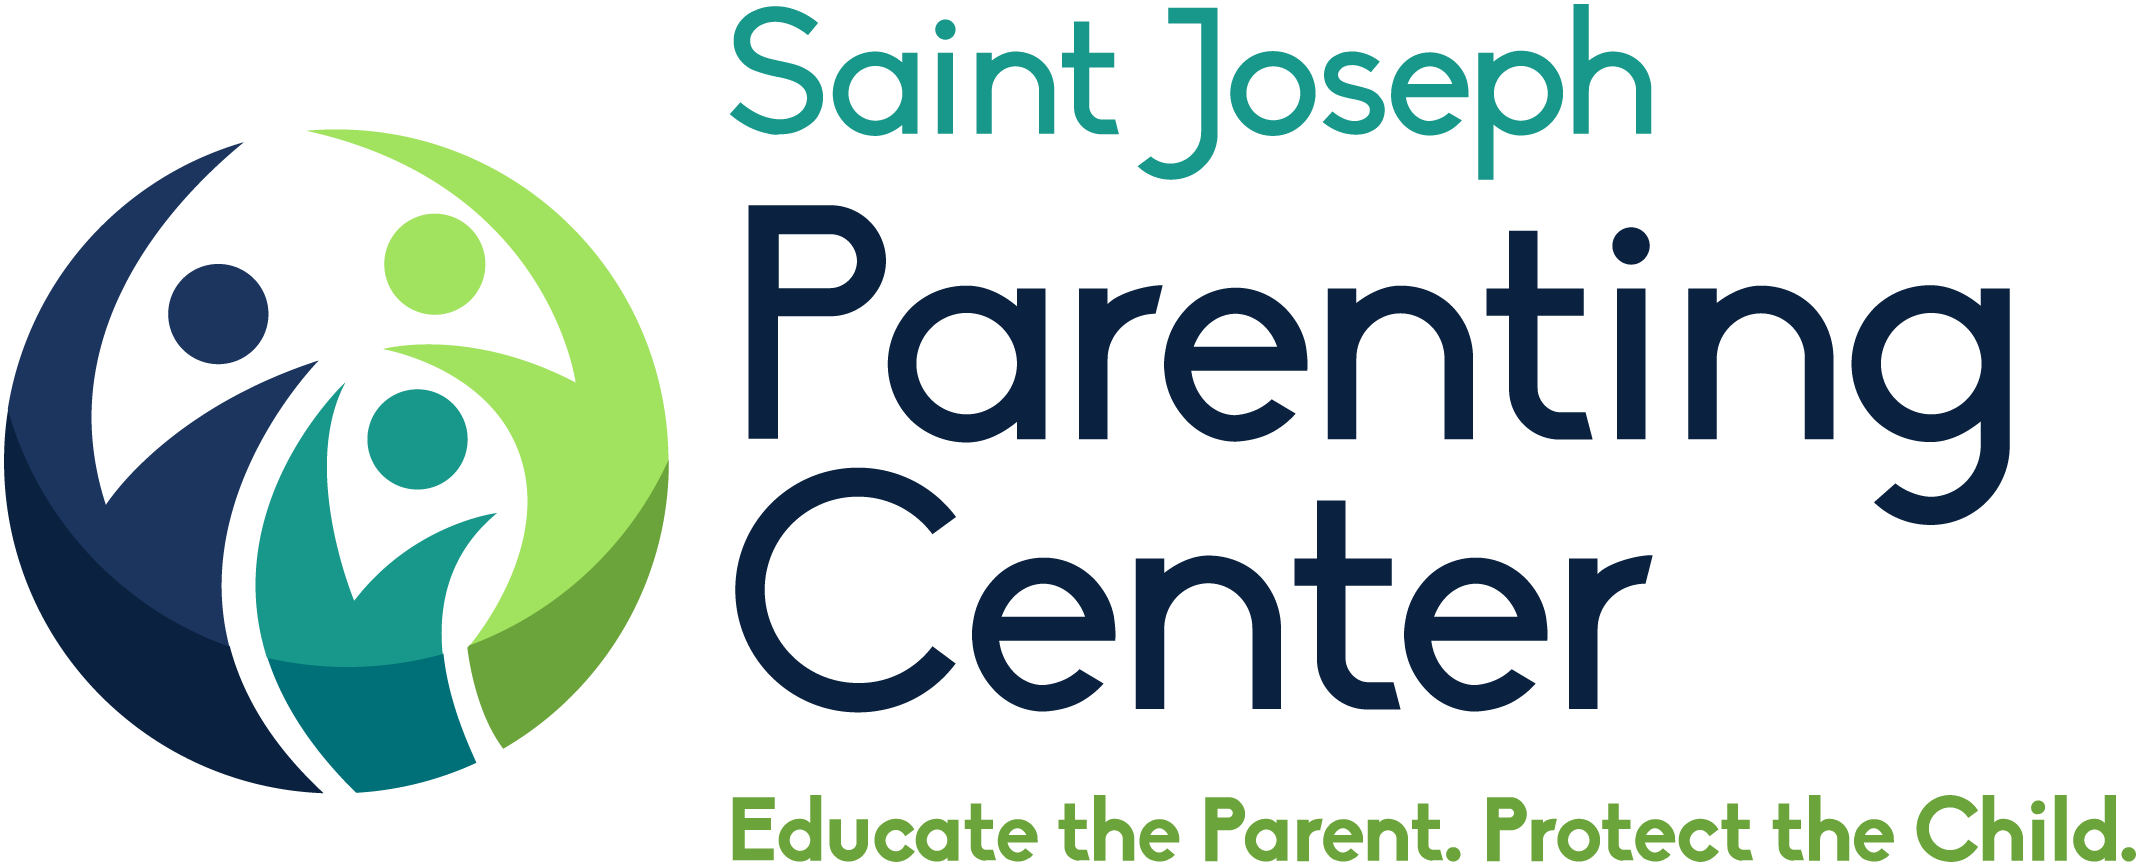 Saint Joseph's Parenting Center